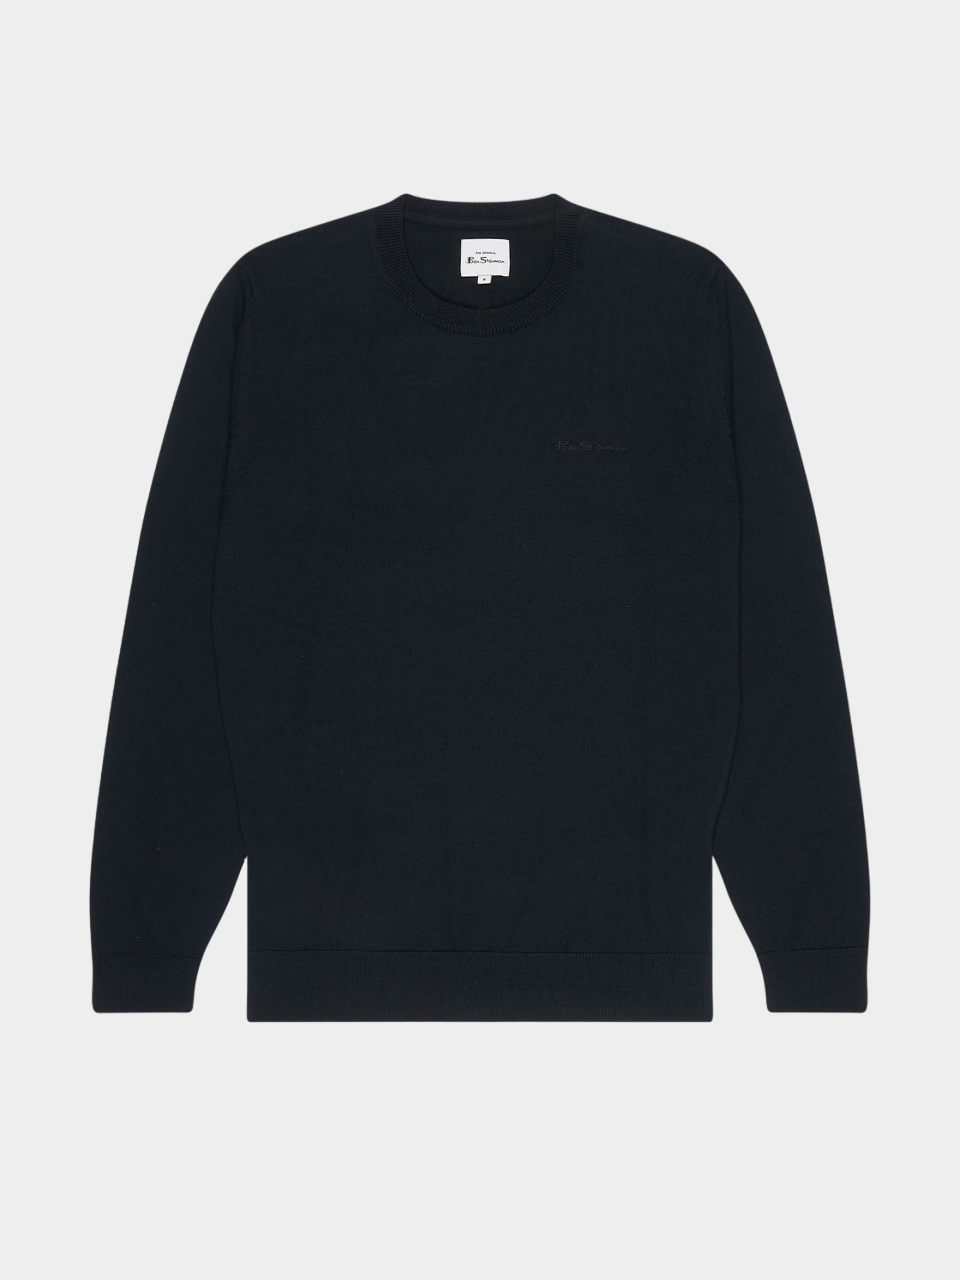 Signature Knit Crewneck Sweater - Black - Ben Sherman